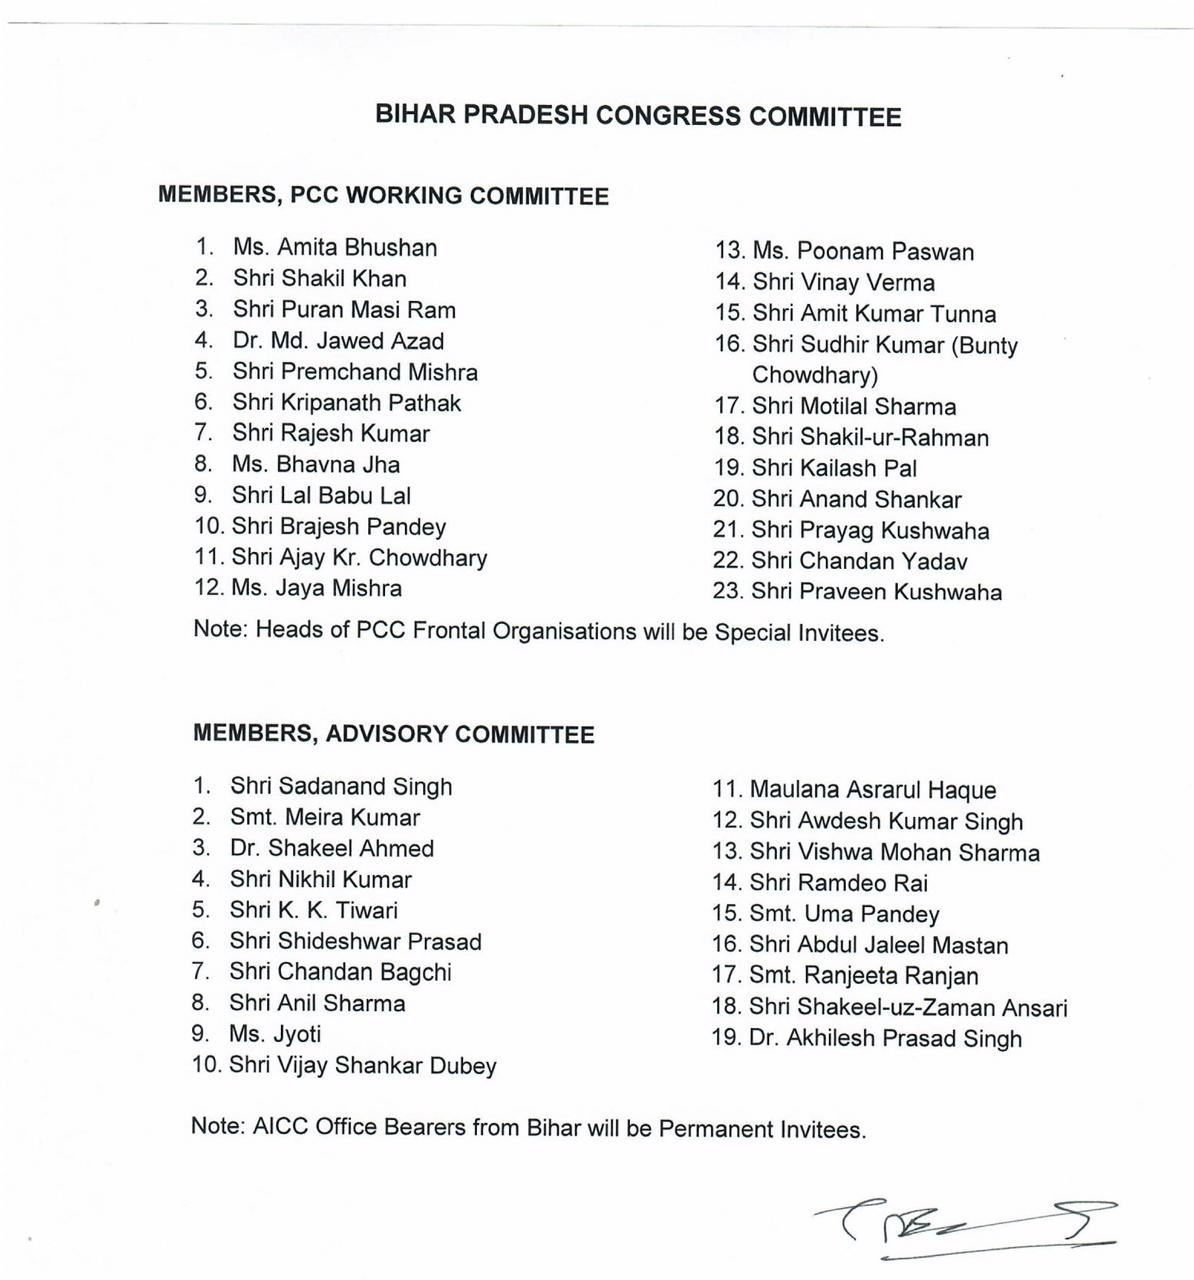 Madan Mohan Jha is Bihars' new PCC Chief, Congress issues the list